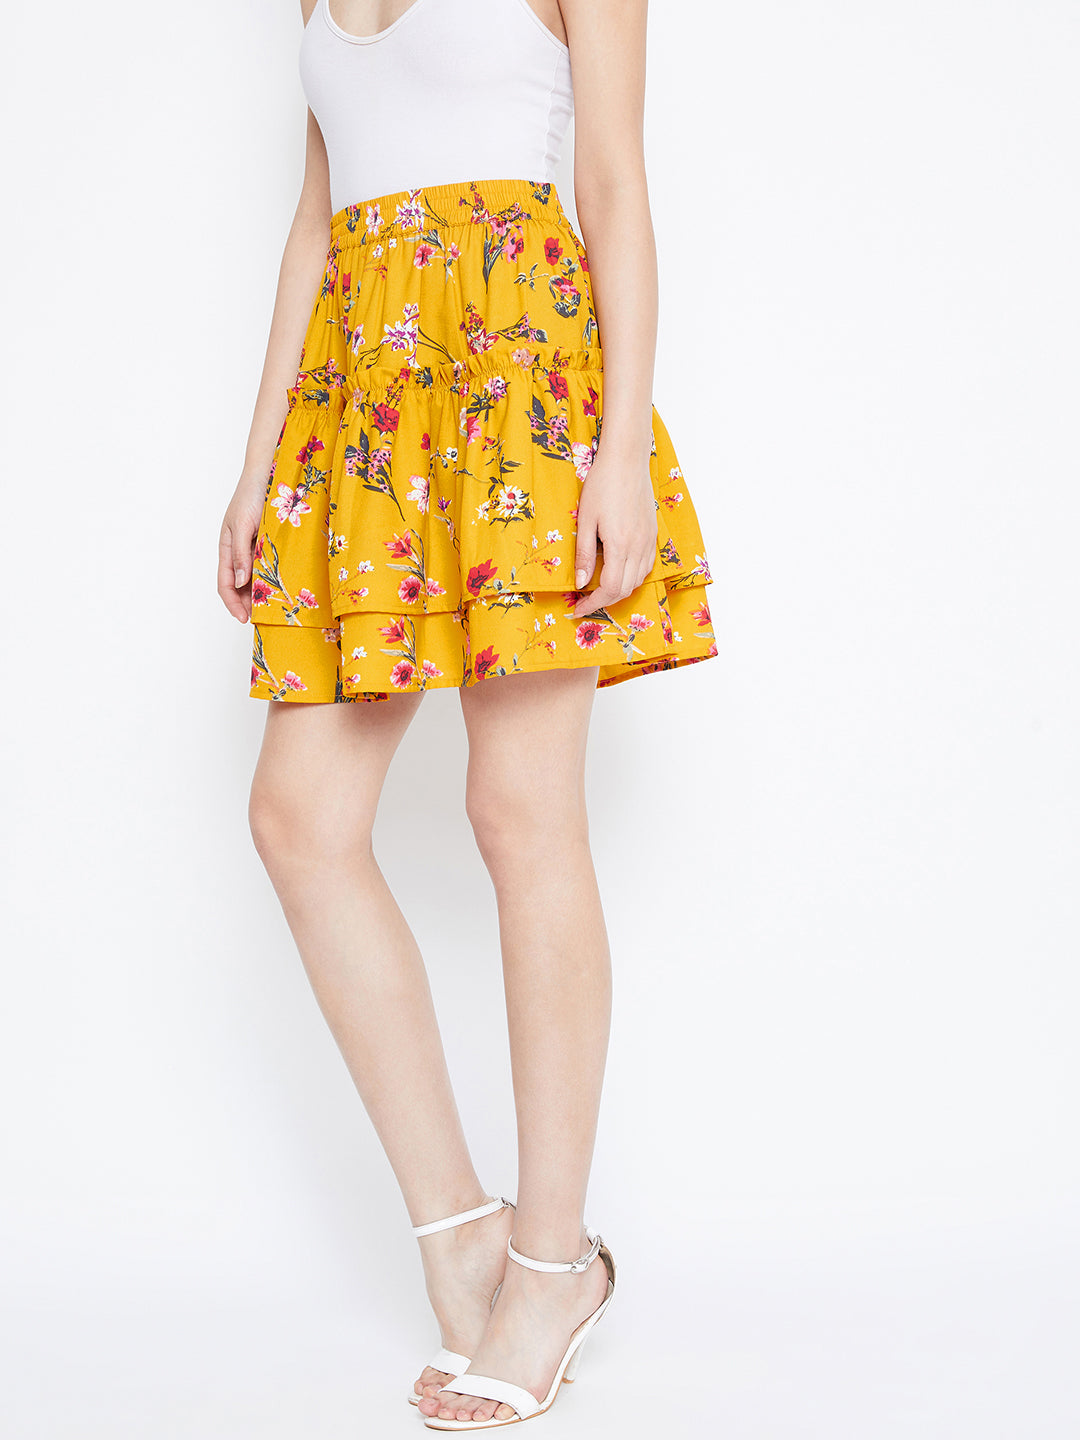 Berrylush Women Yellow Floral Print Skirt Mini Layered Slip-On